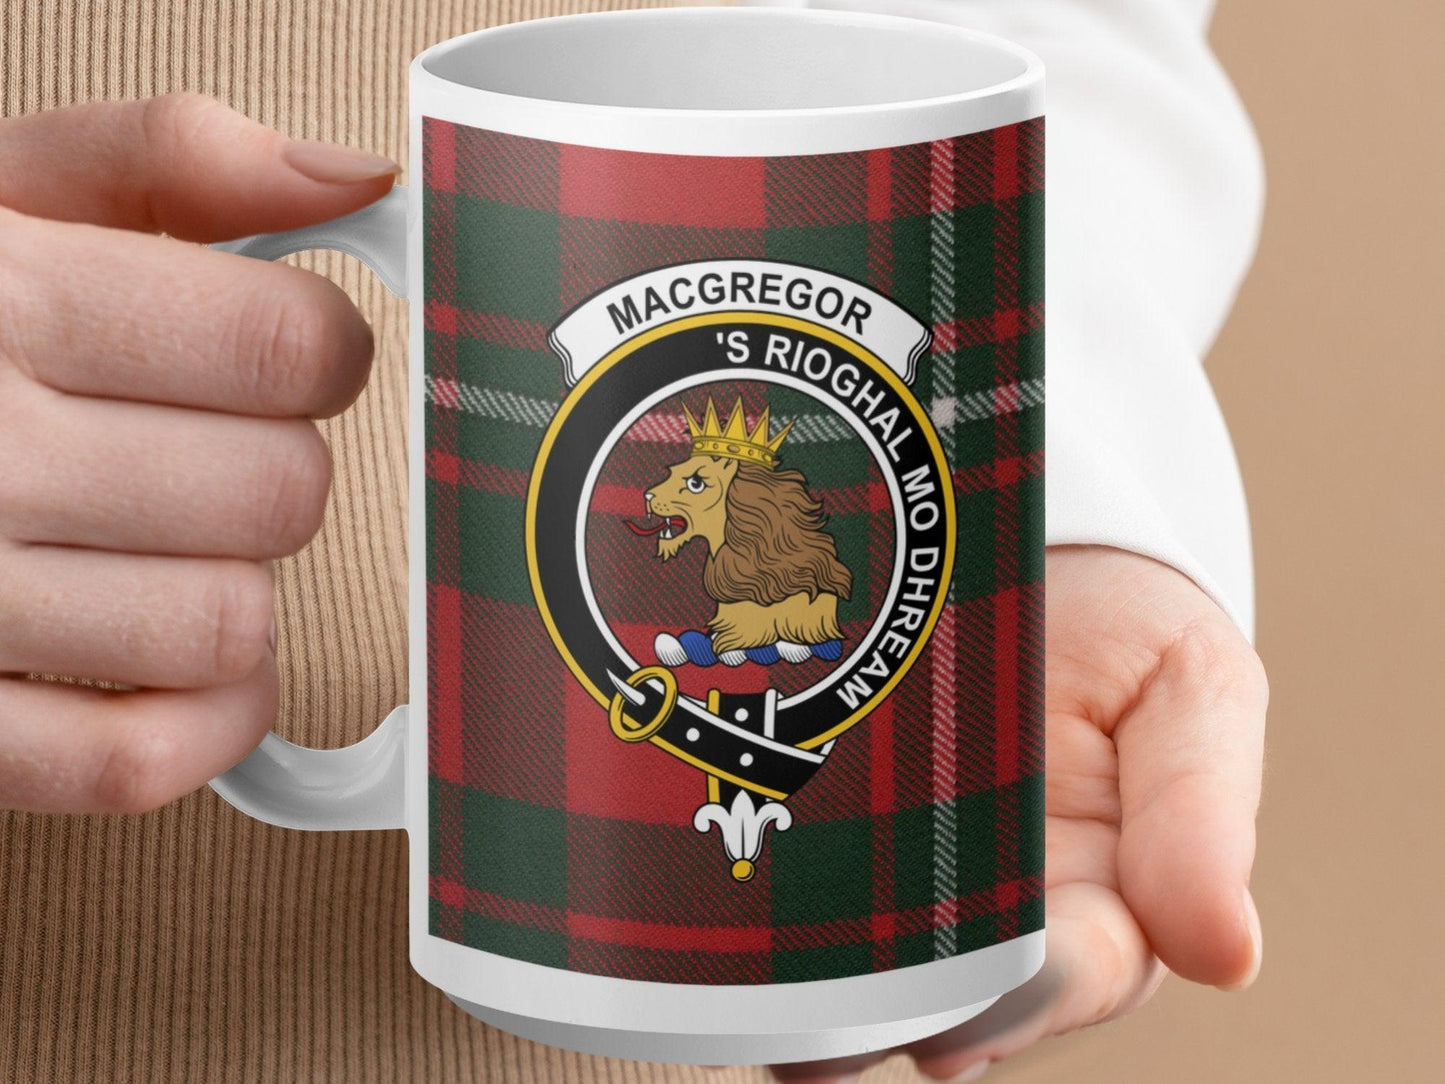 MacGregor Scottish Clan Tartan Crest Plaid Design Mug - Living Stone Gifts